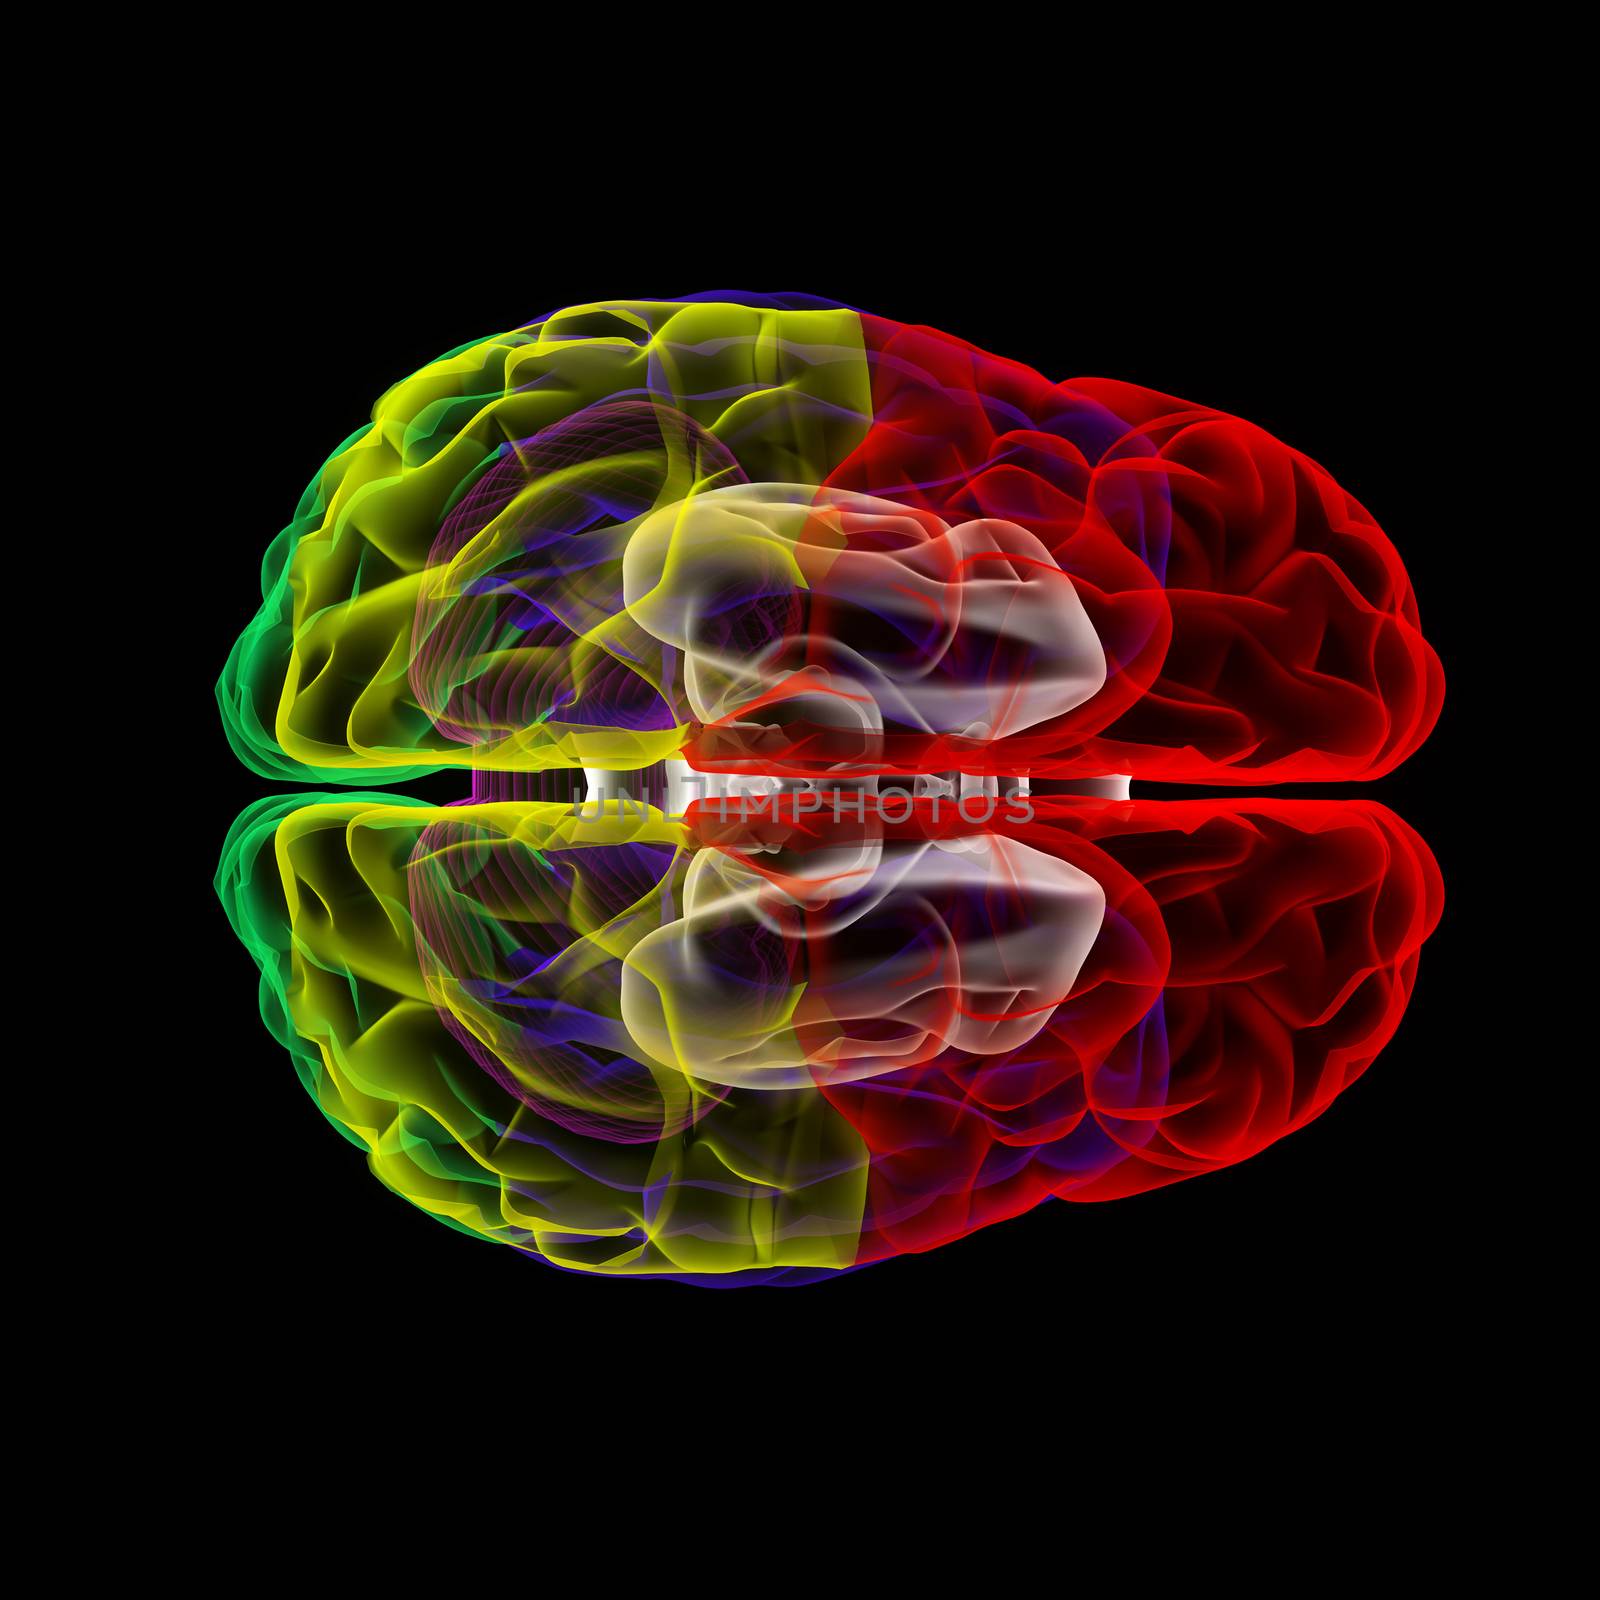 Human brain in x-ray - top view